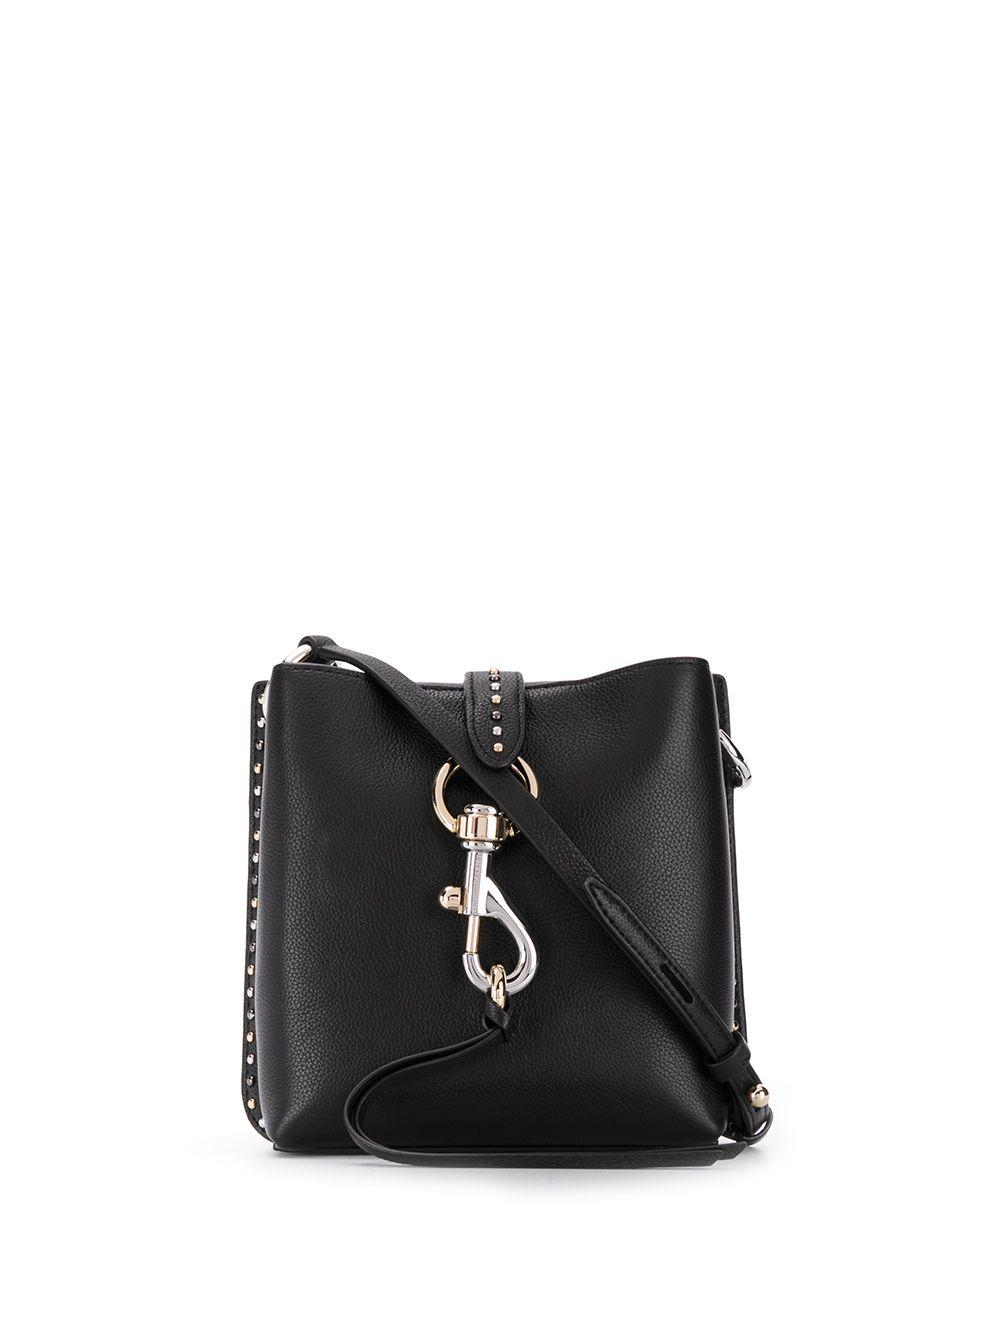 Rebecca Minkoff Leather Mini Megan Crossbody Bag in Black - Lyst